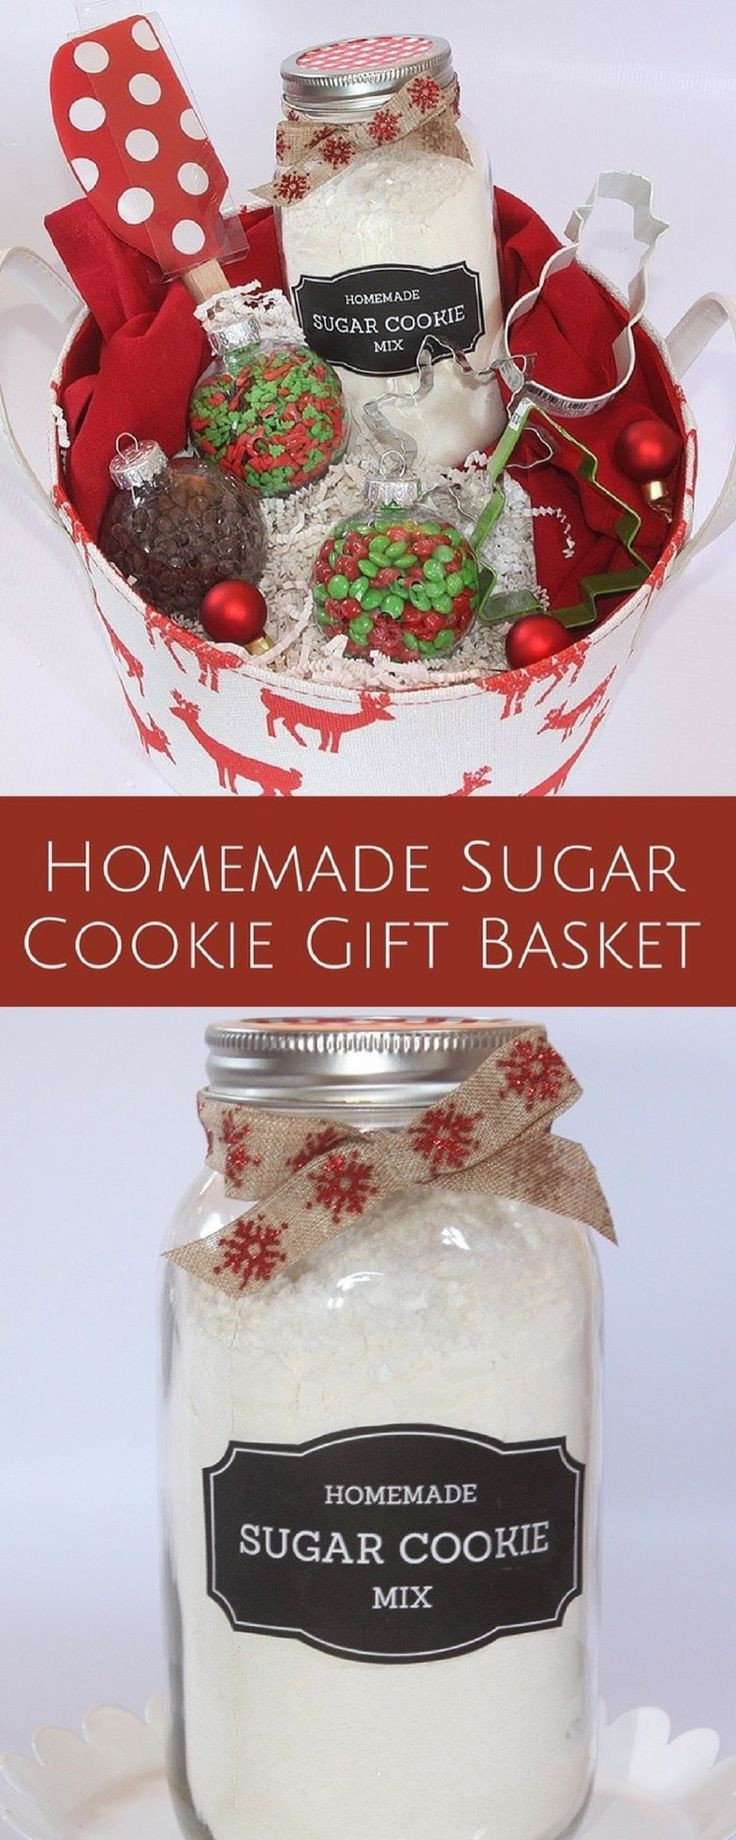 Cookie Gift Basket Ideas
 Best 25 Cookie t baskets ideas on Pinterest